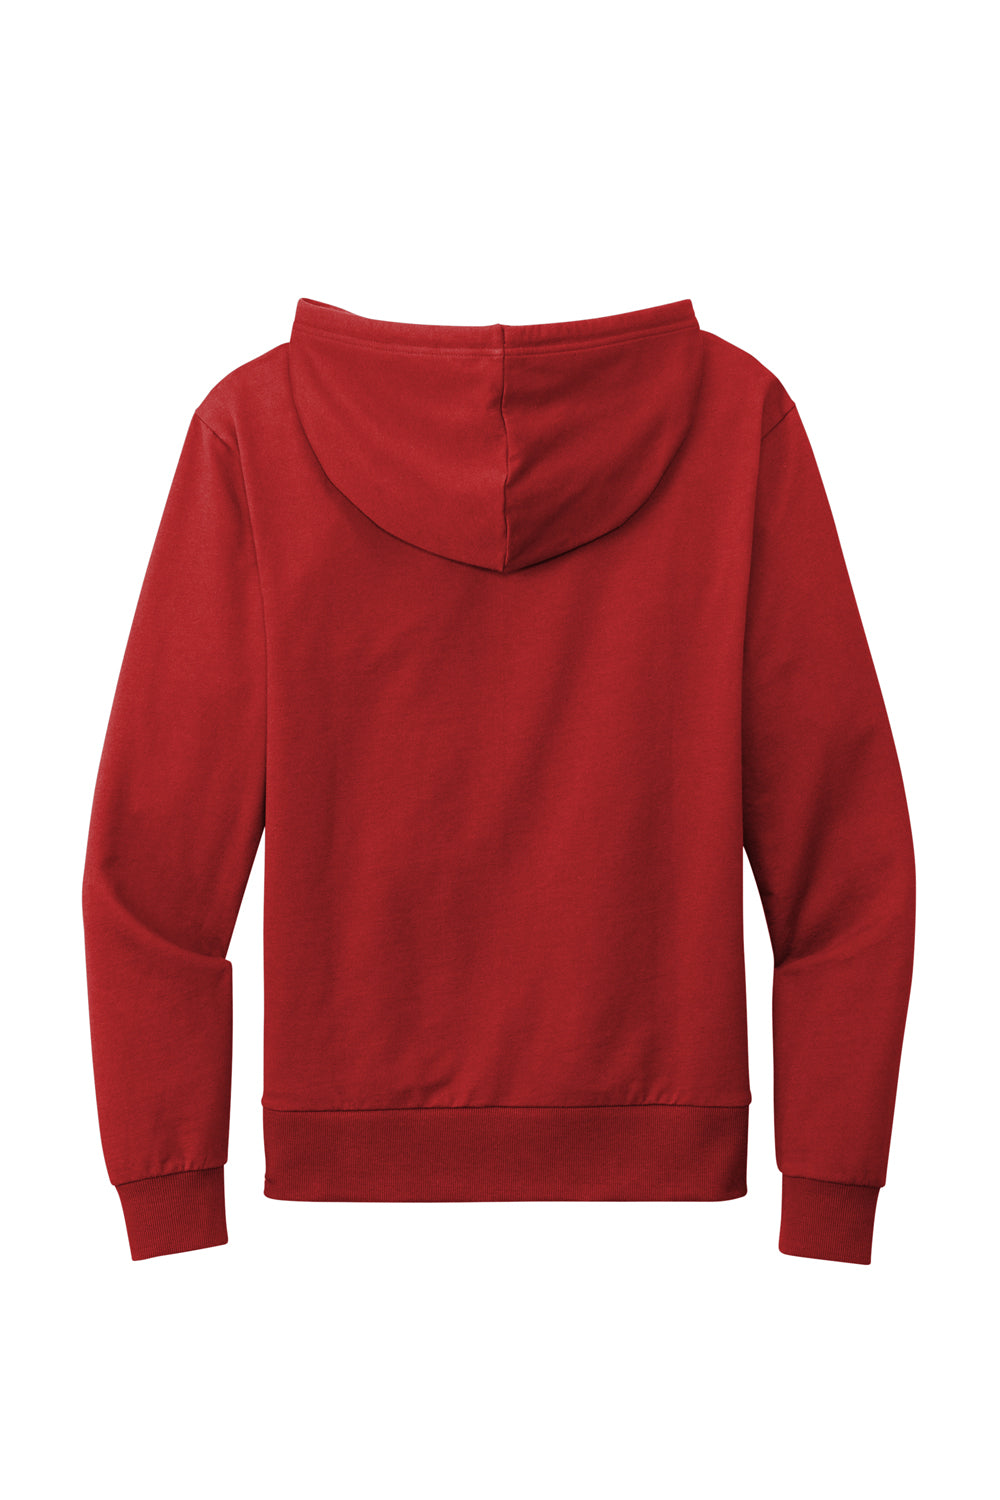 Allmade AL4000 Mens Organic French Terry Hooded Sweatshirt Hoodie Revolution Red Flat Back